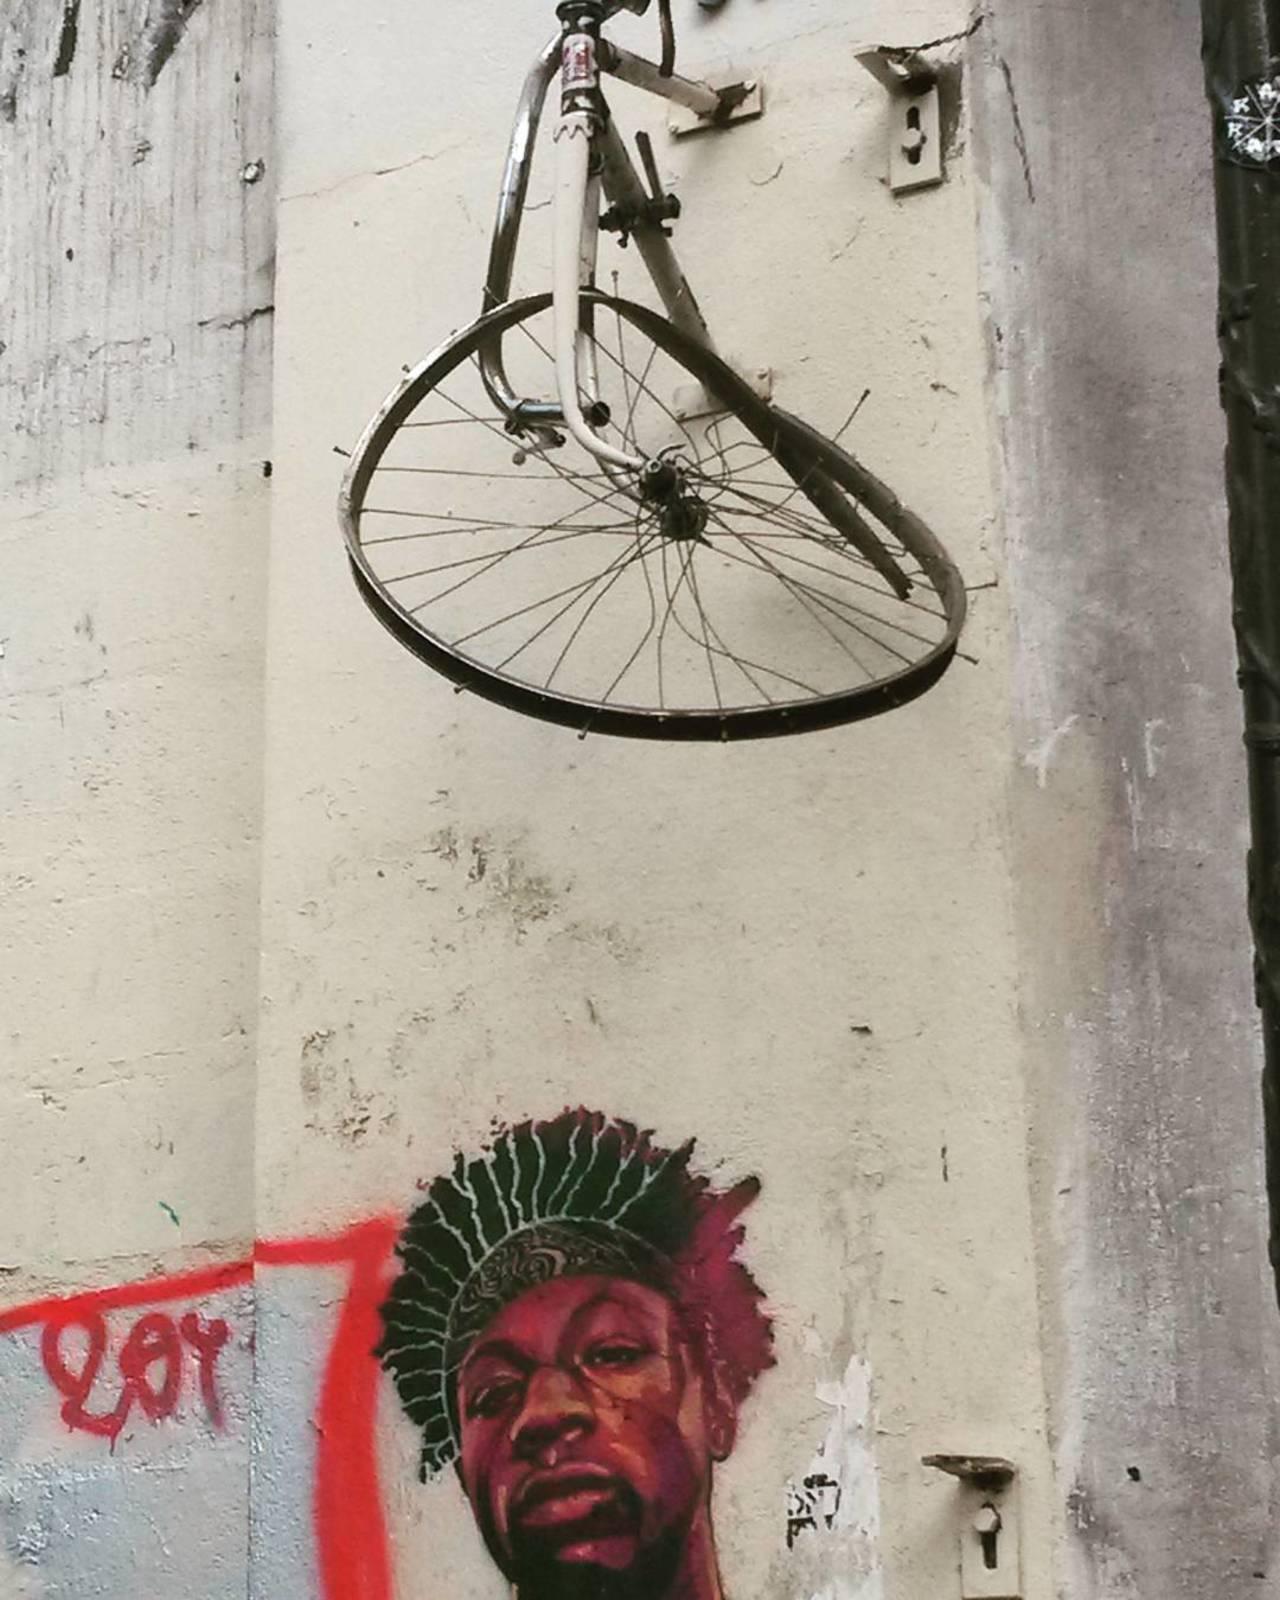 circumjacent_fr: #Paris #graffiti photo by le_cyclopede http://ift.tt/1OCIlYQ #StreetArt http://t.co/bGkF6Rdwlf